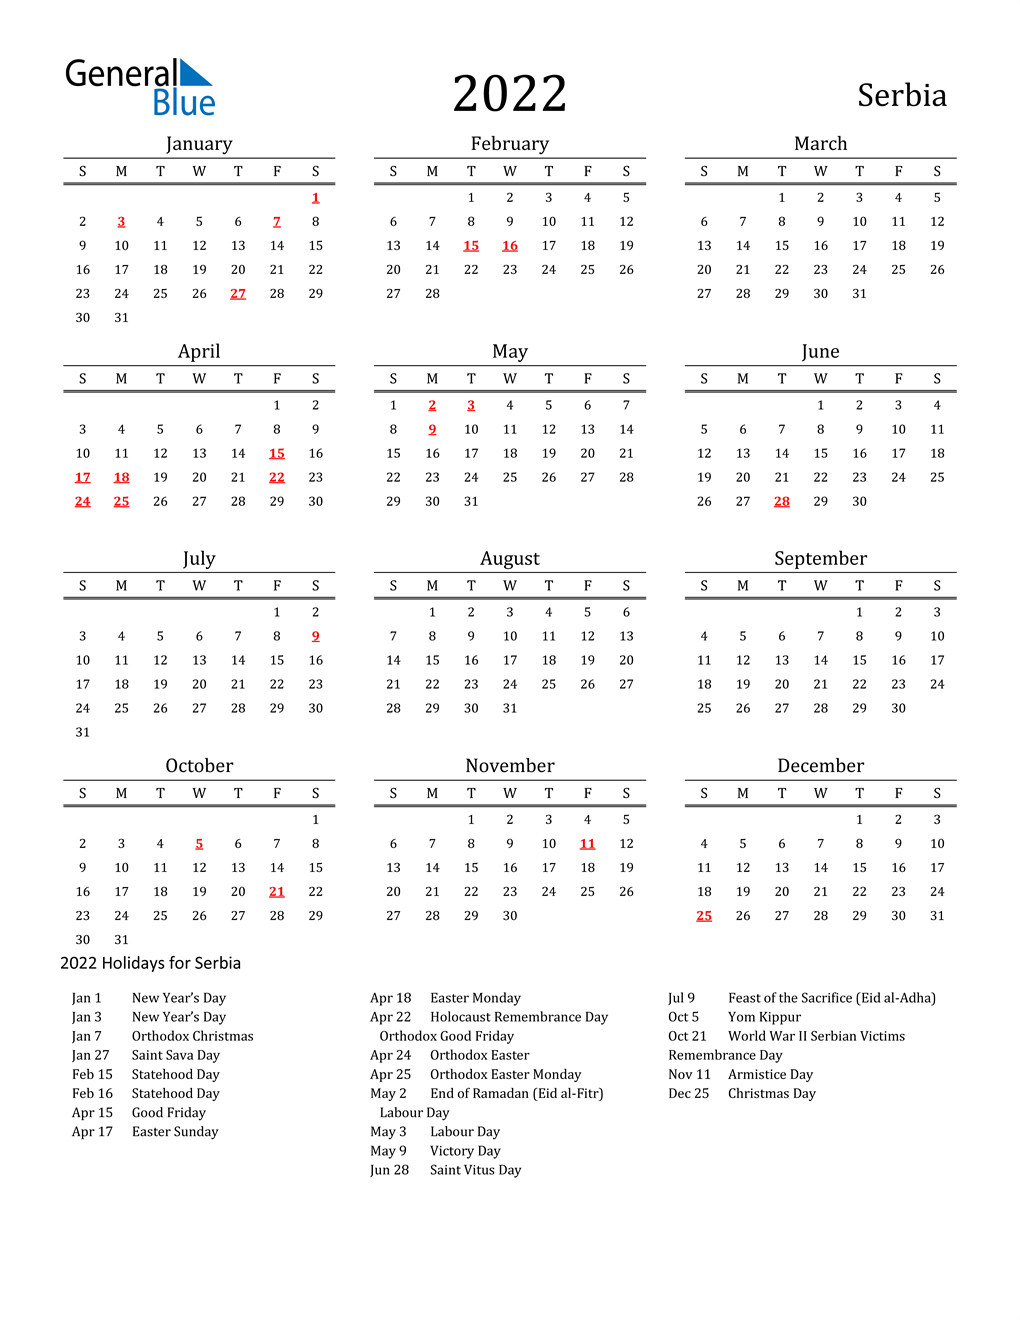 Serbian Orthodox Calendar 2022 February 2022 Calendar